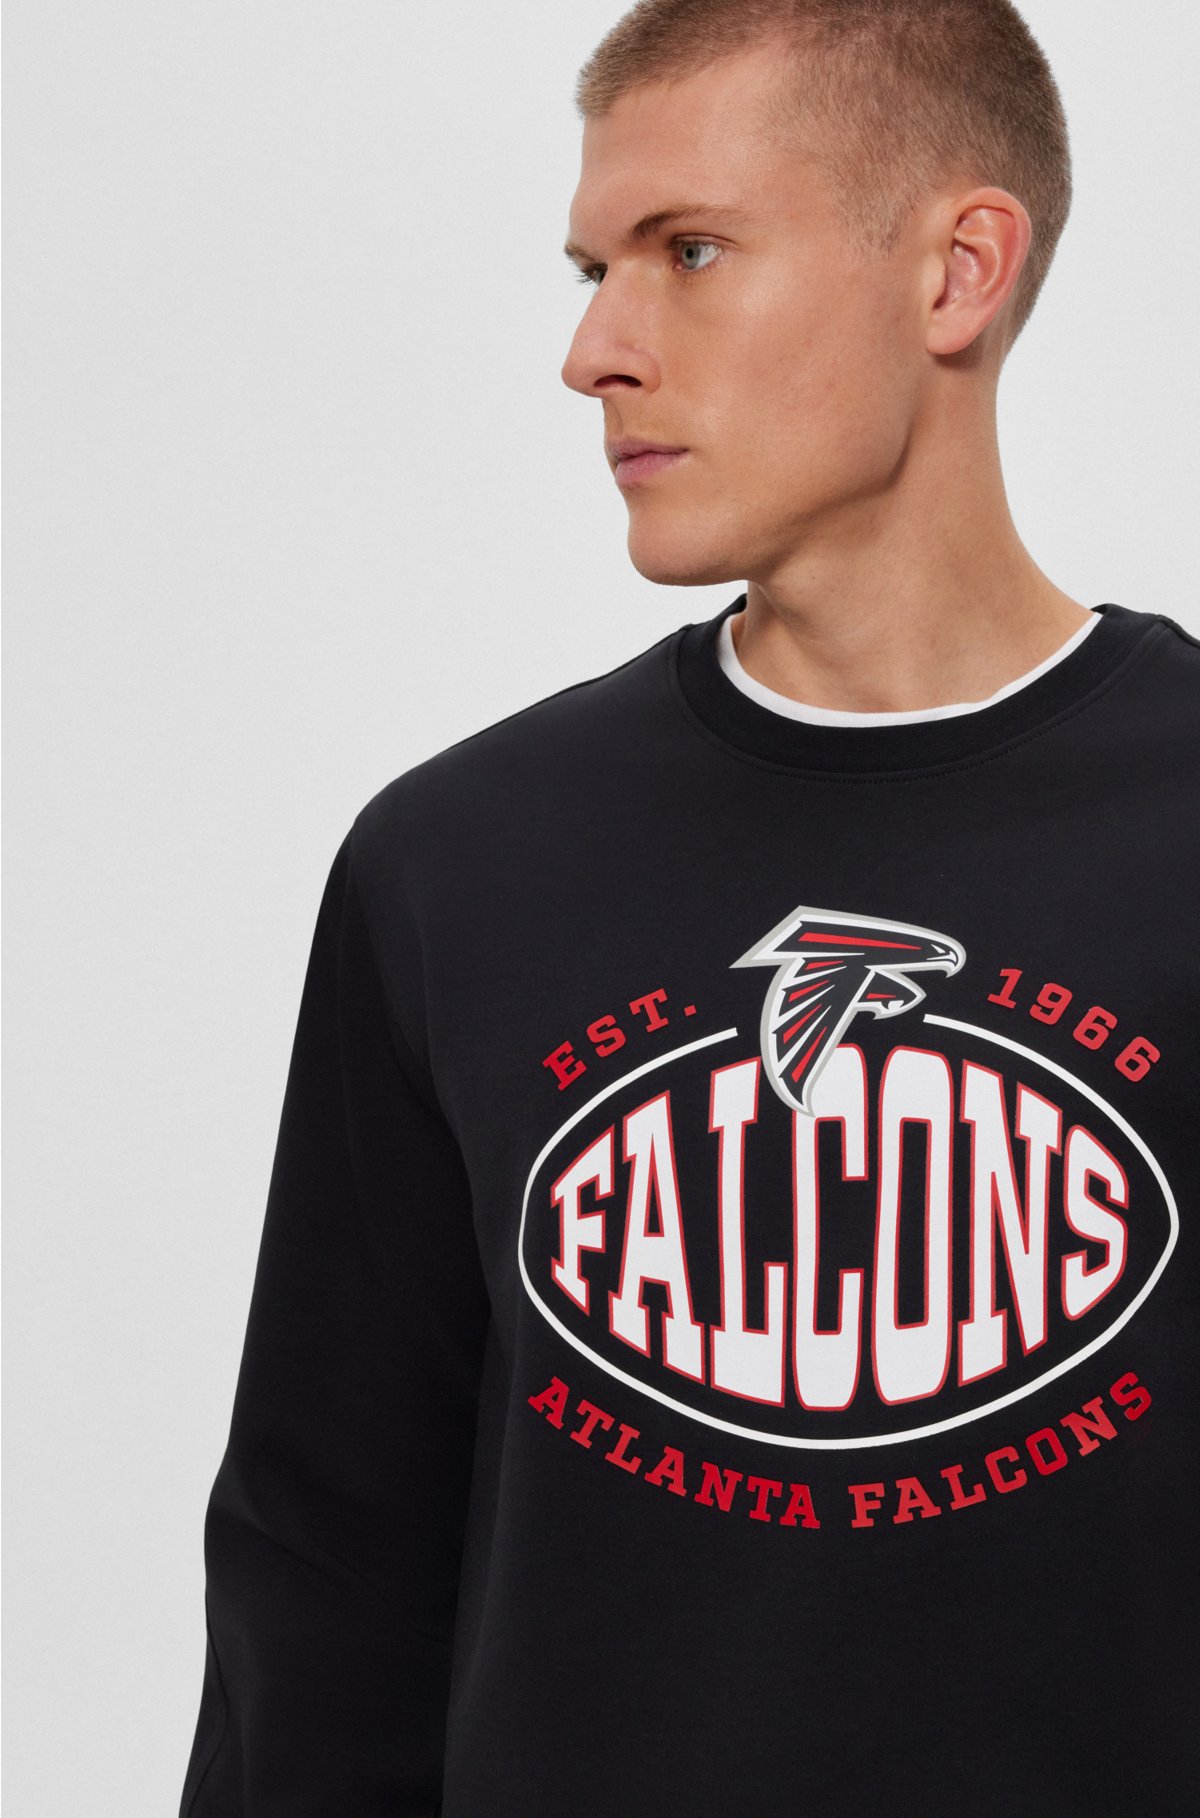 BOSS x NFL cotton-blend sweatshirt with collaborative branding, Falcons